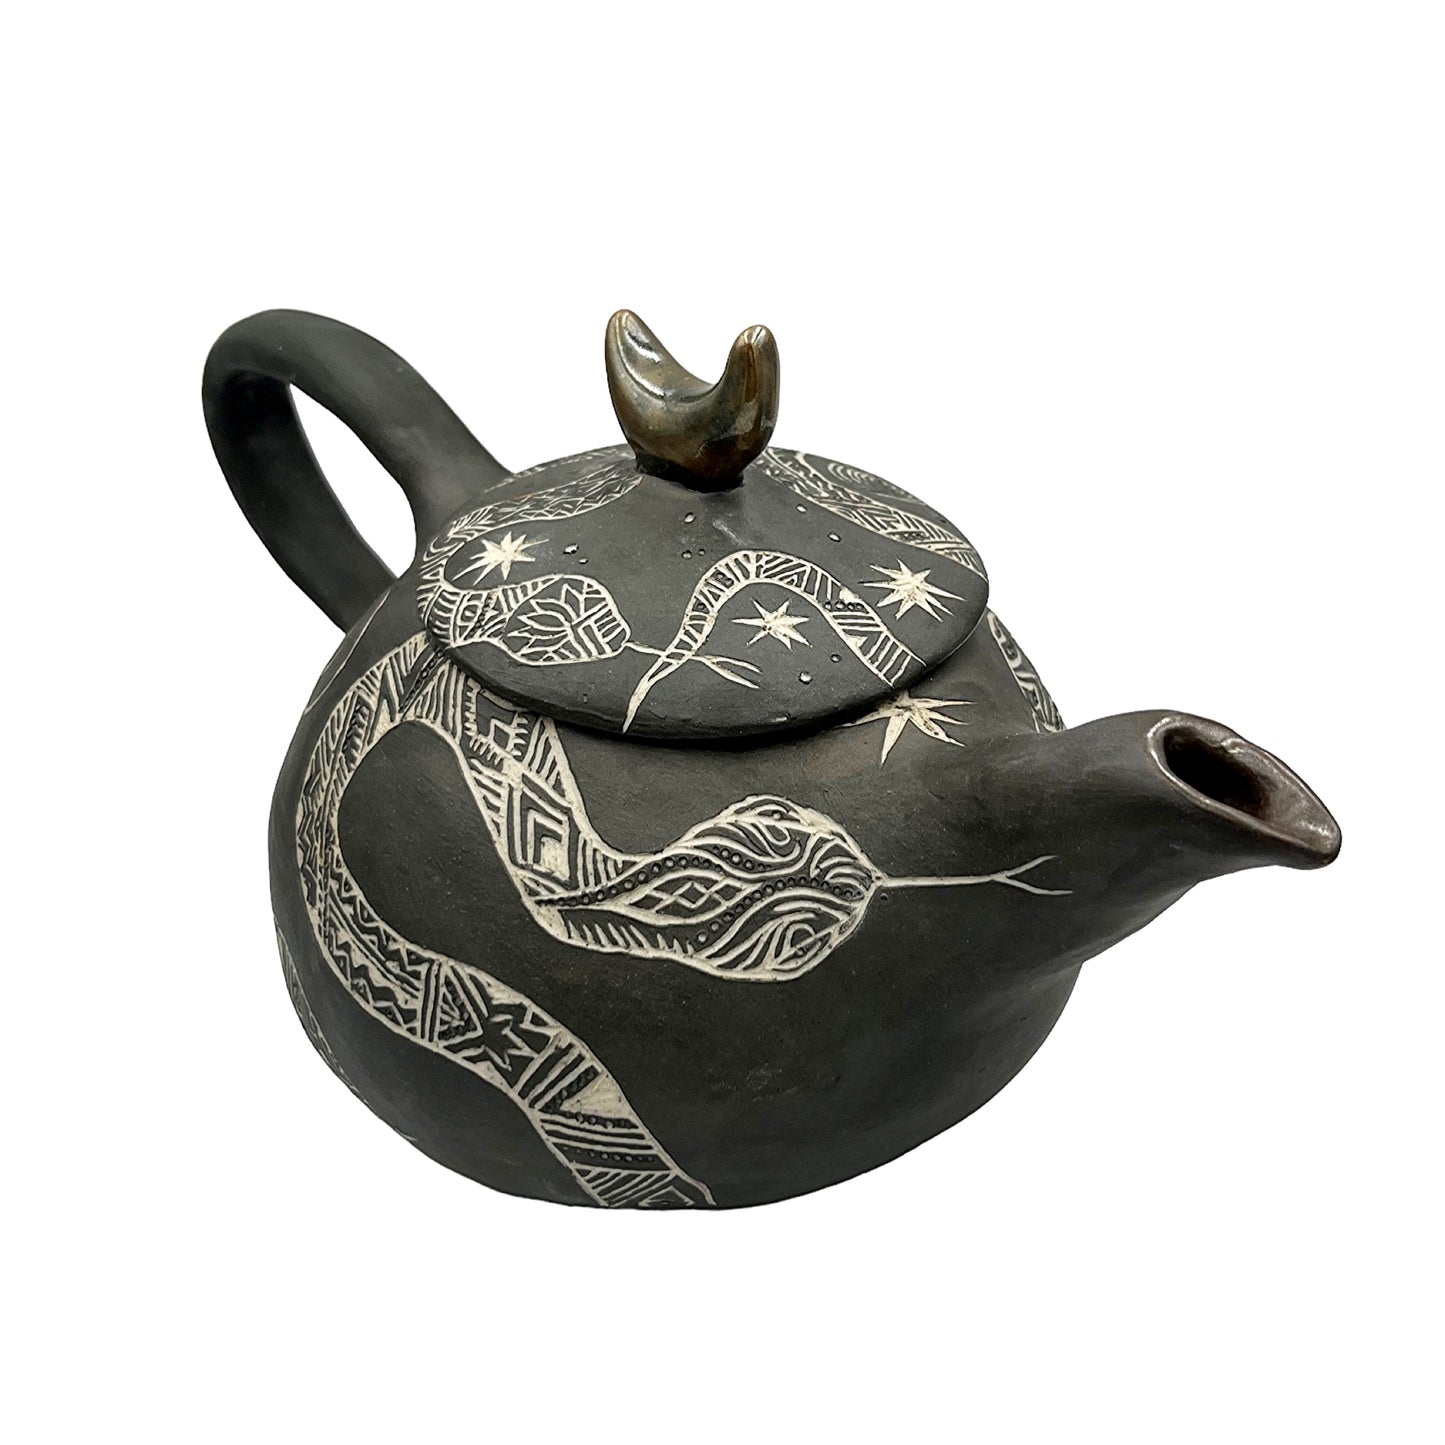 Snake collection teapot